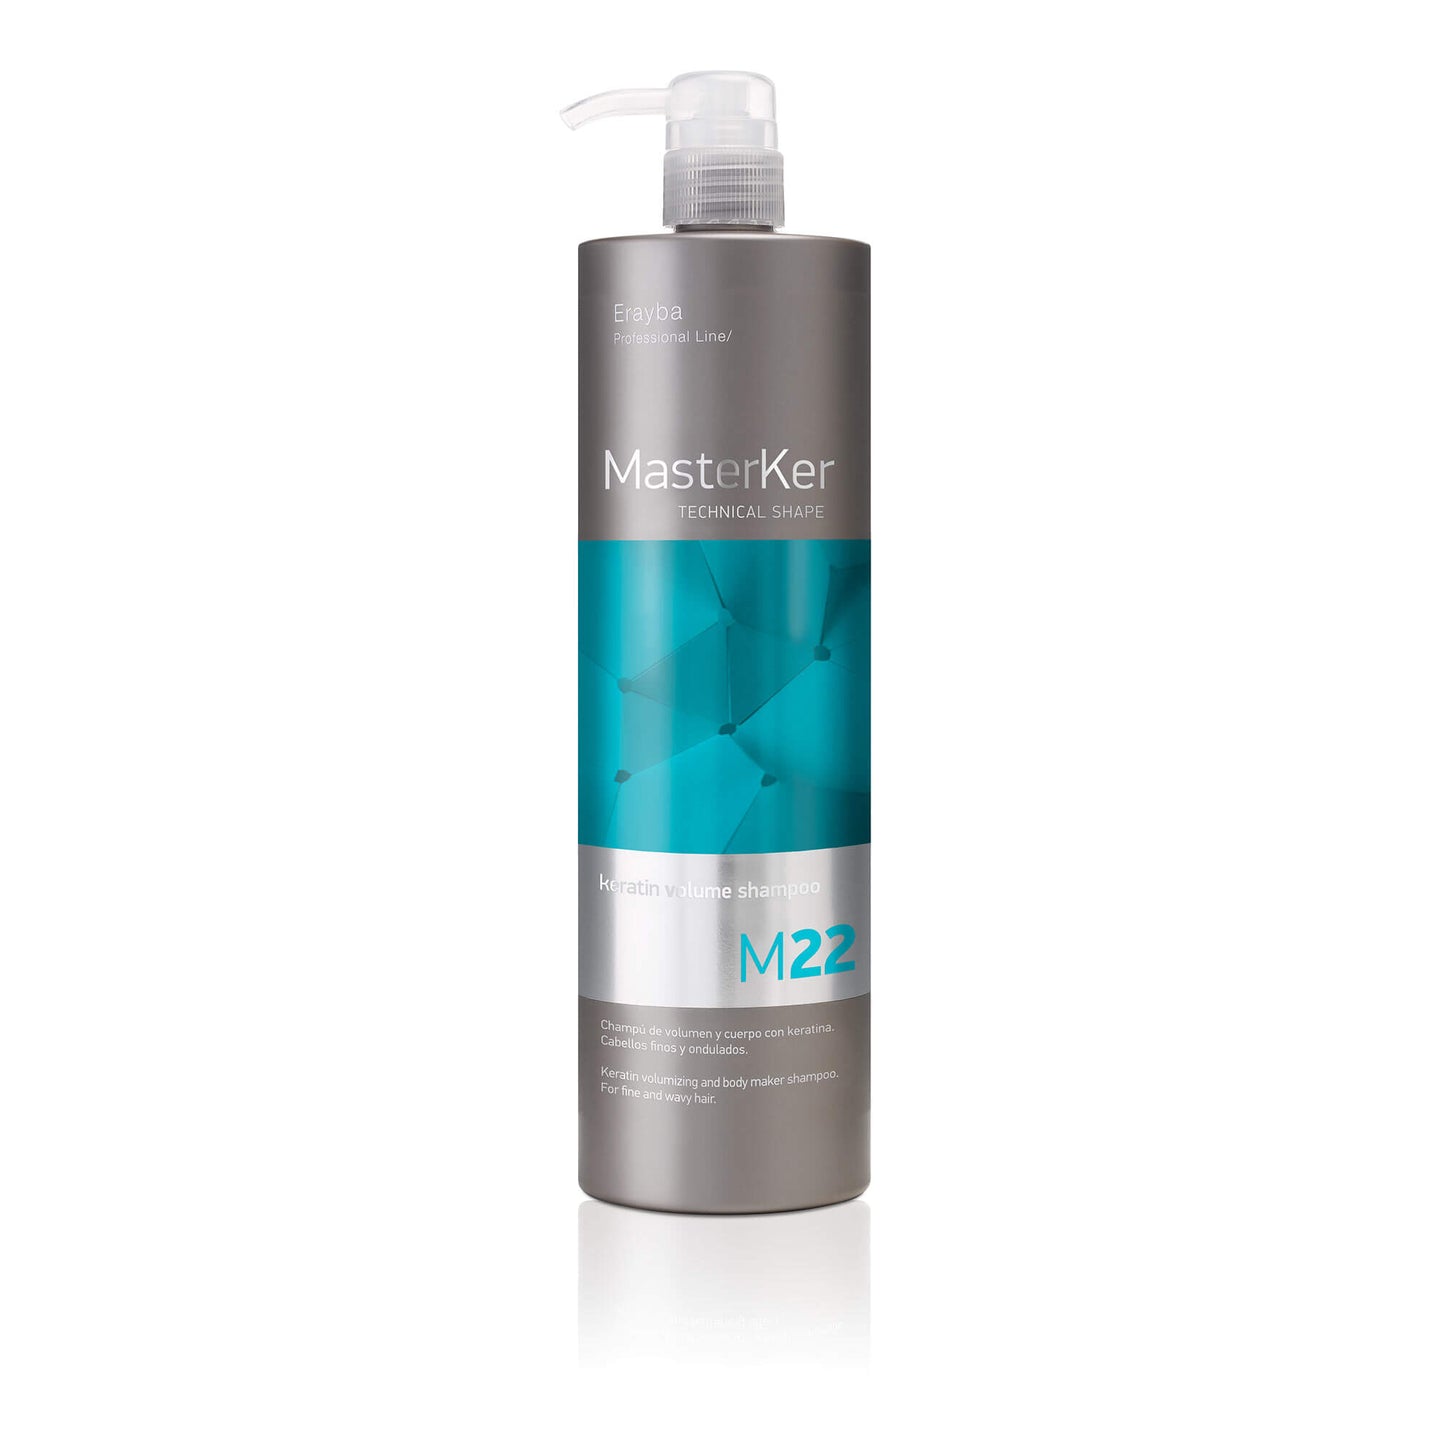 MasterKer M22 keratin volume shampoo